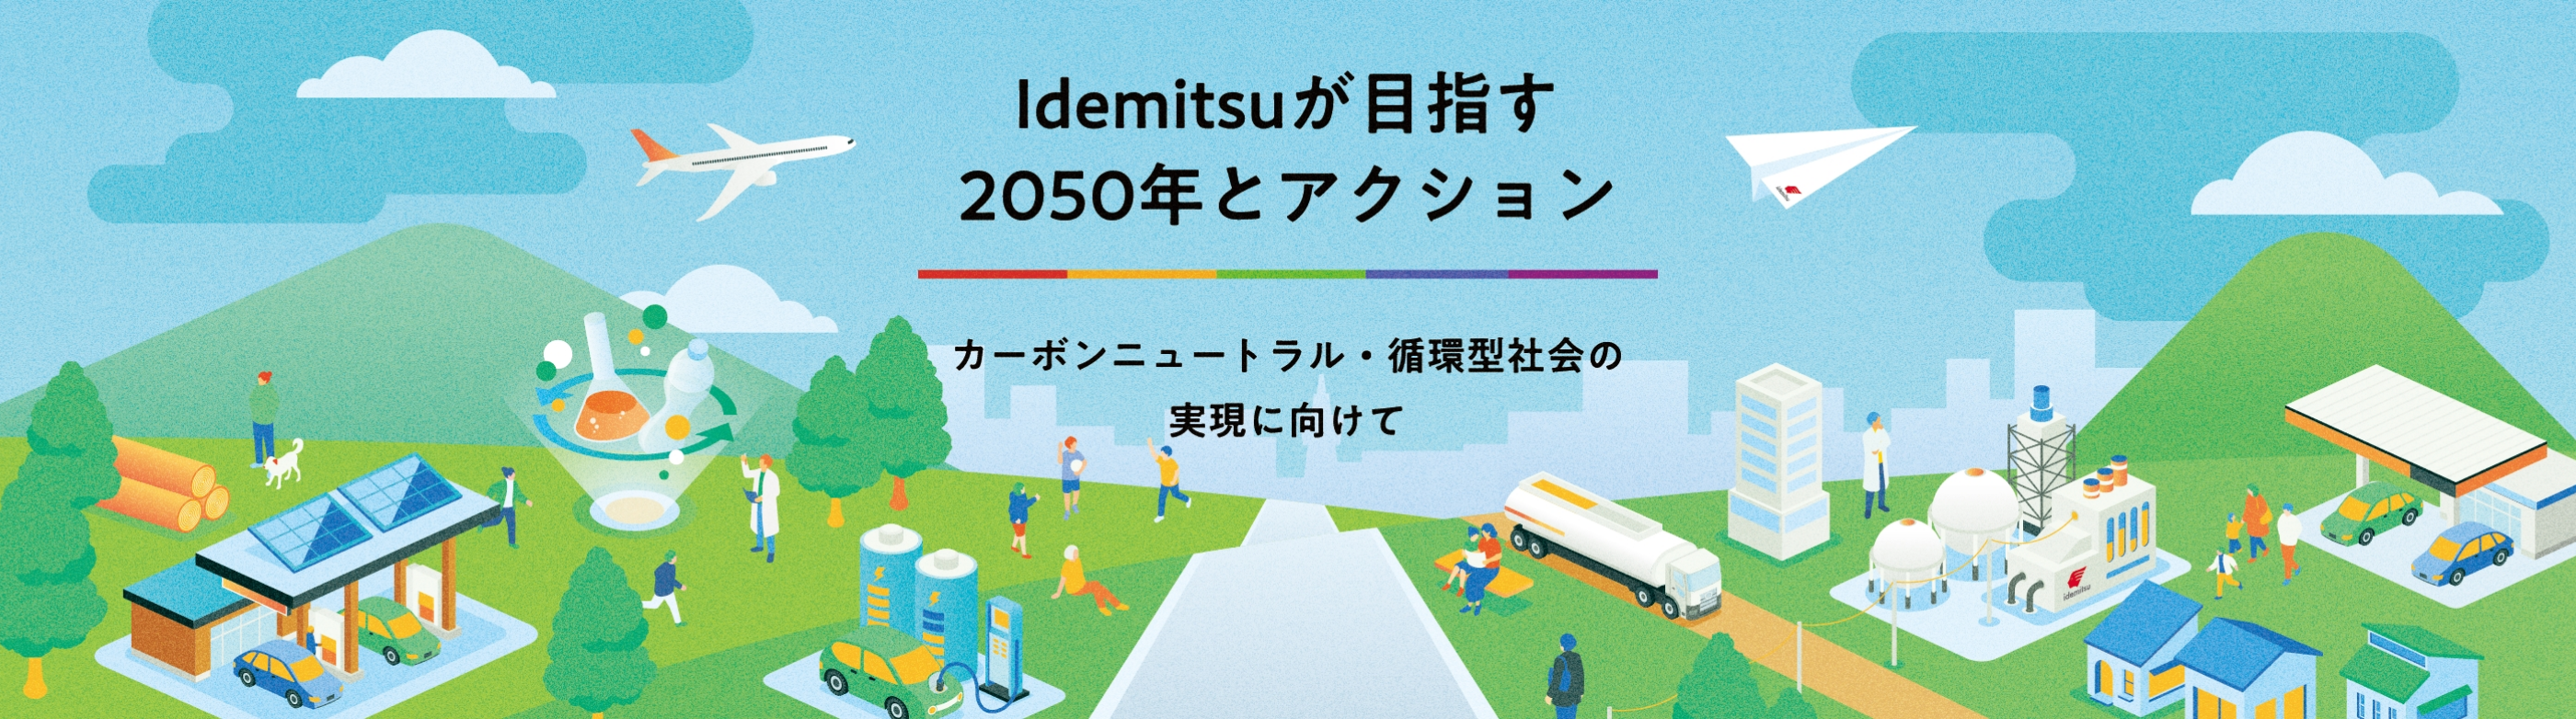 Idemitsuが目指す2050年とアクション